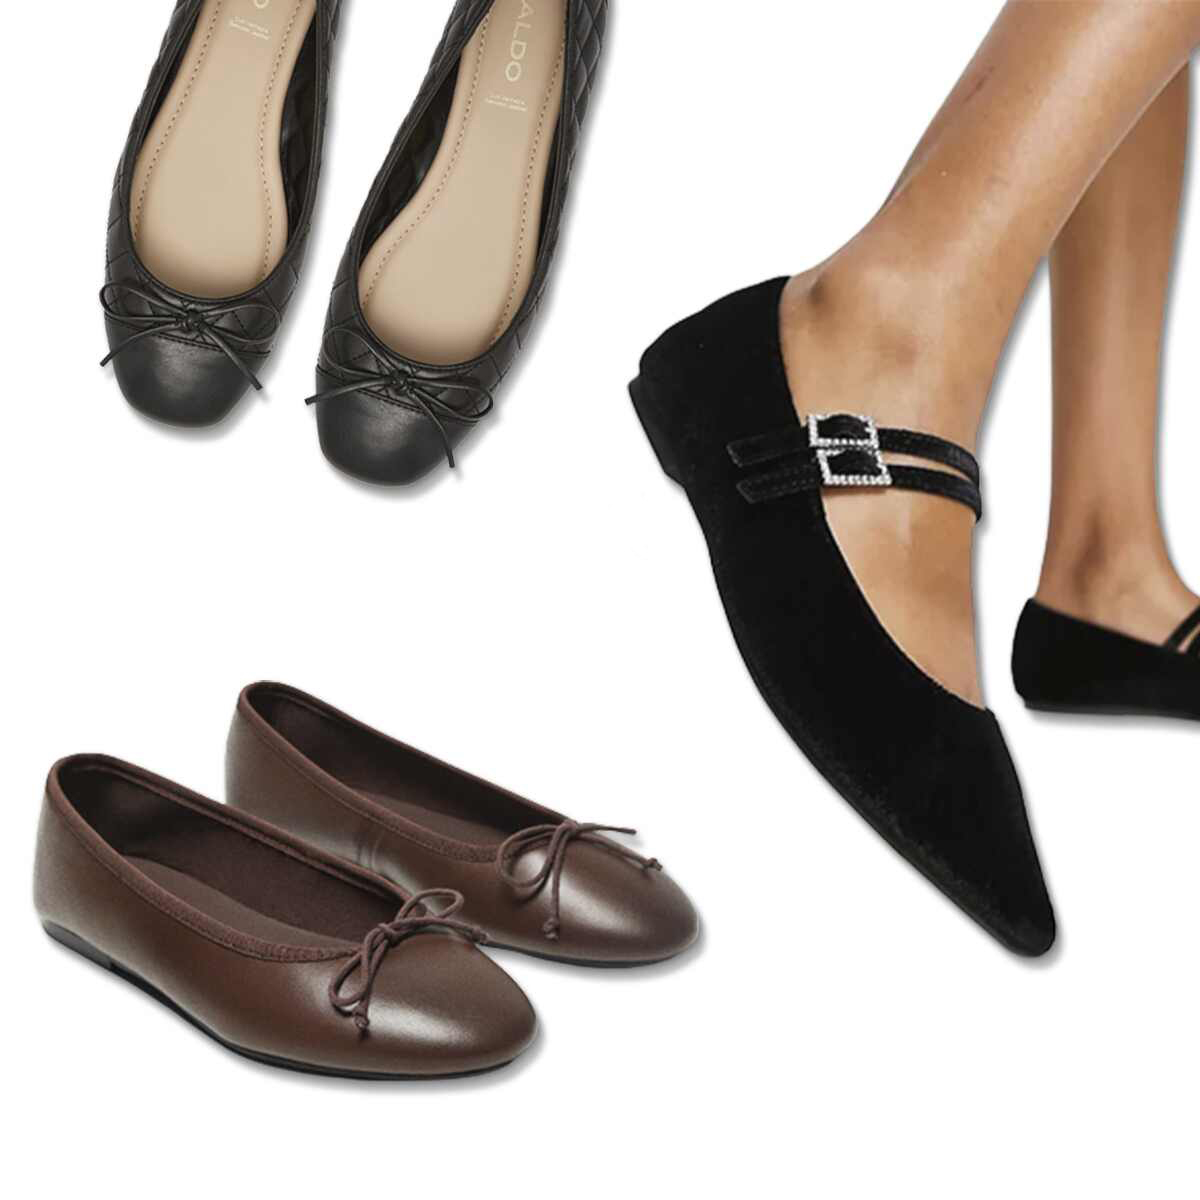  CIOR Women Ballet Flats Classy Simple Casual Slip-on Comfort  Walking Shoes | Flats